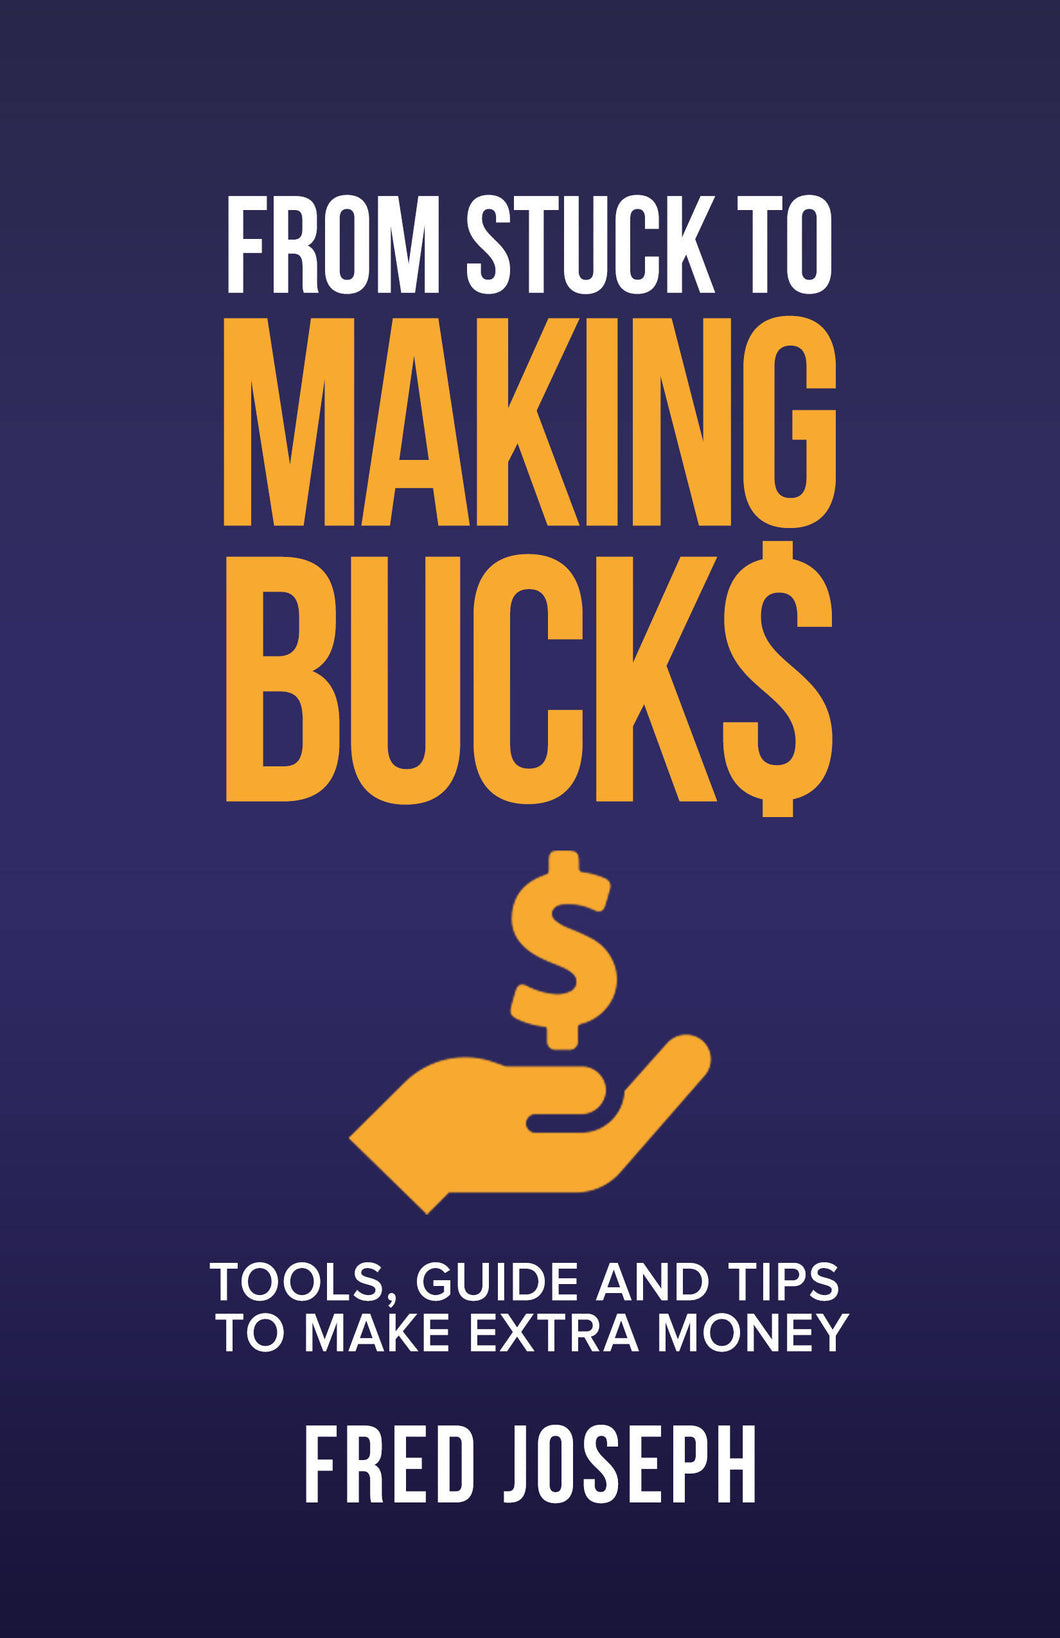 From Stuck To Making Bucks: 15 Profitable Side Hustles